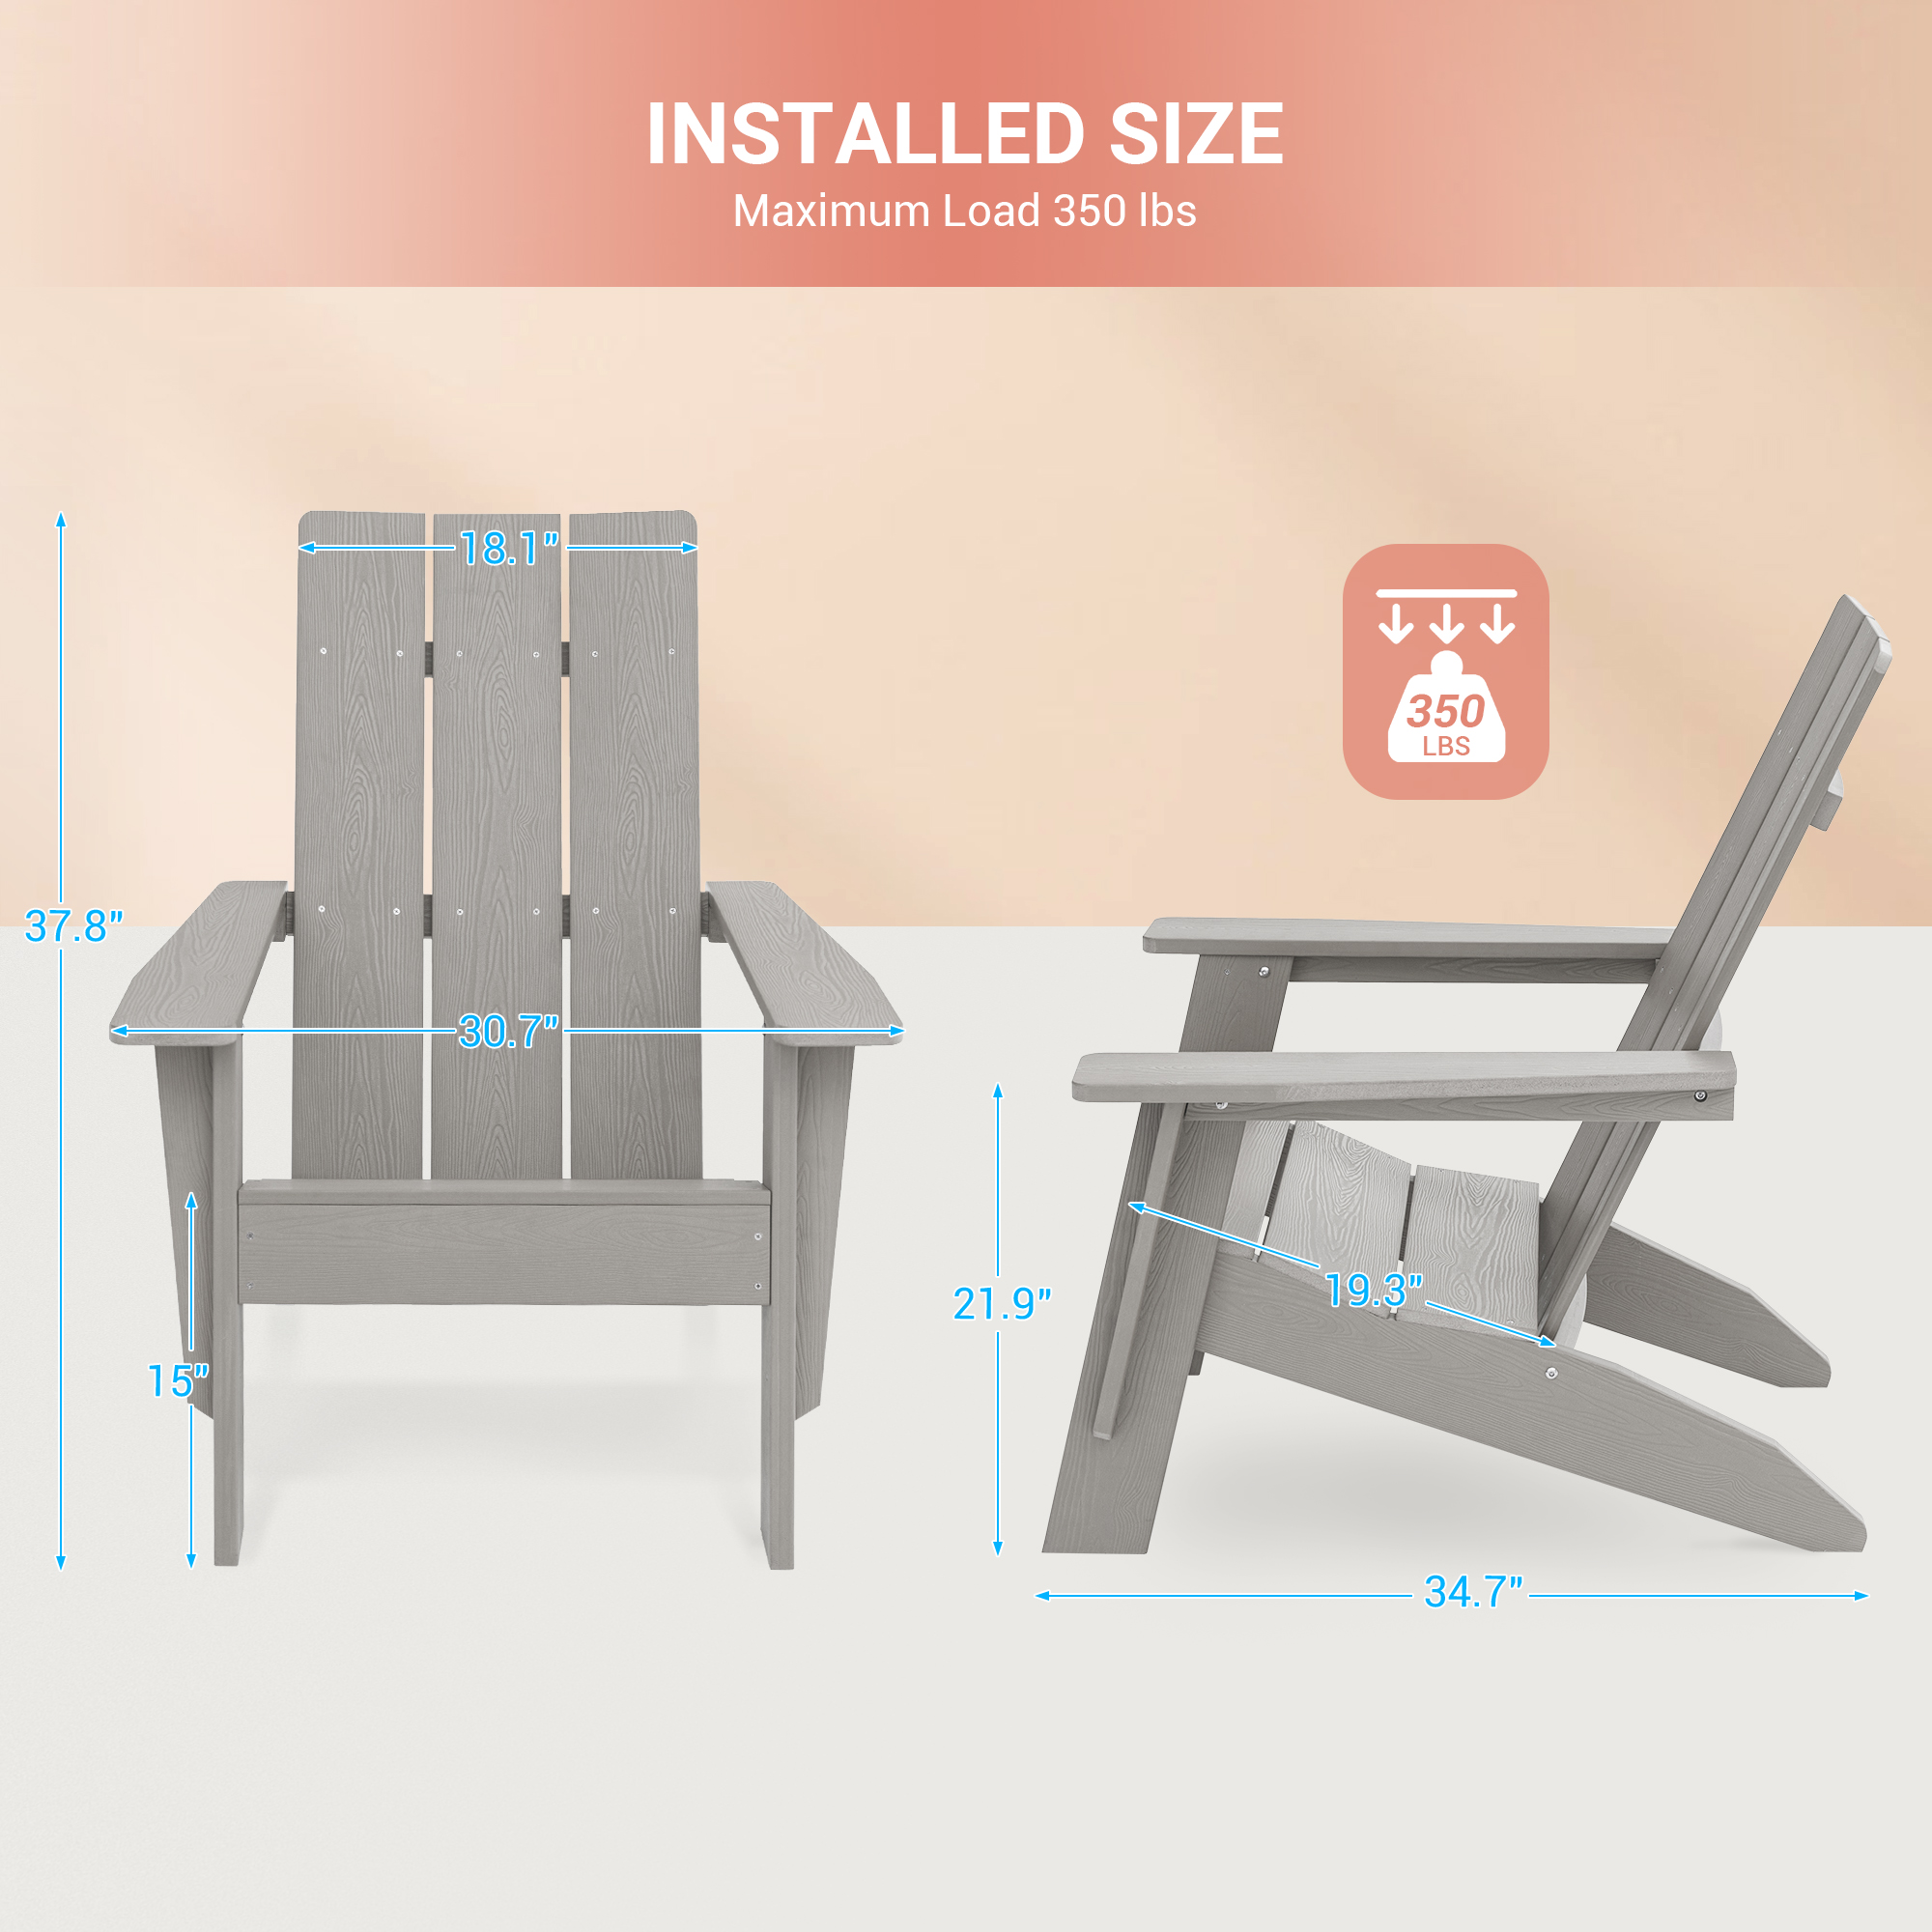 CHYVARY 1 Peak Adirondack Chair, Patio Outdoor Plastic Resin Furniture,Light Gray - image 5 of 7